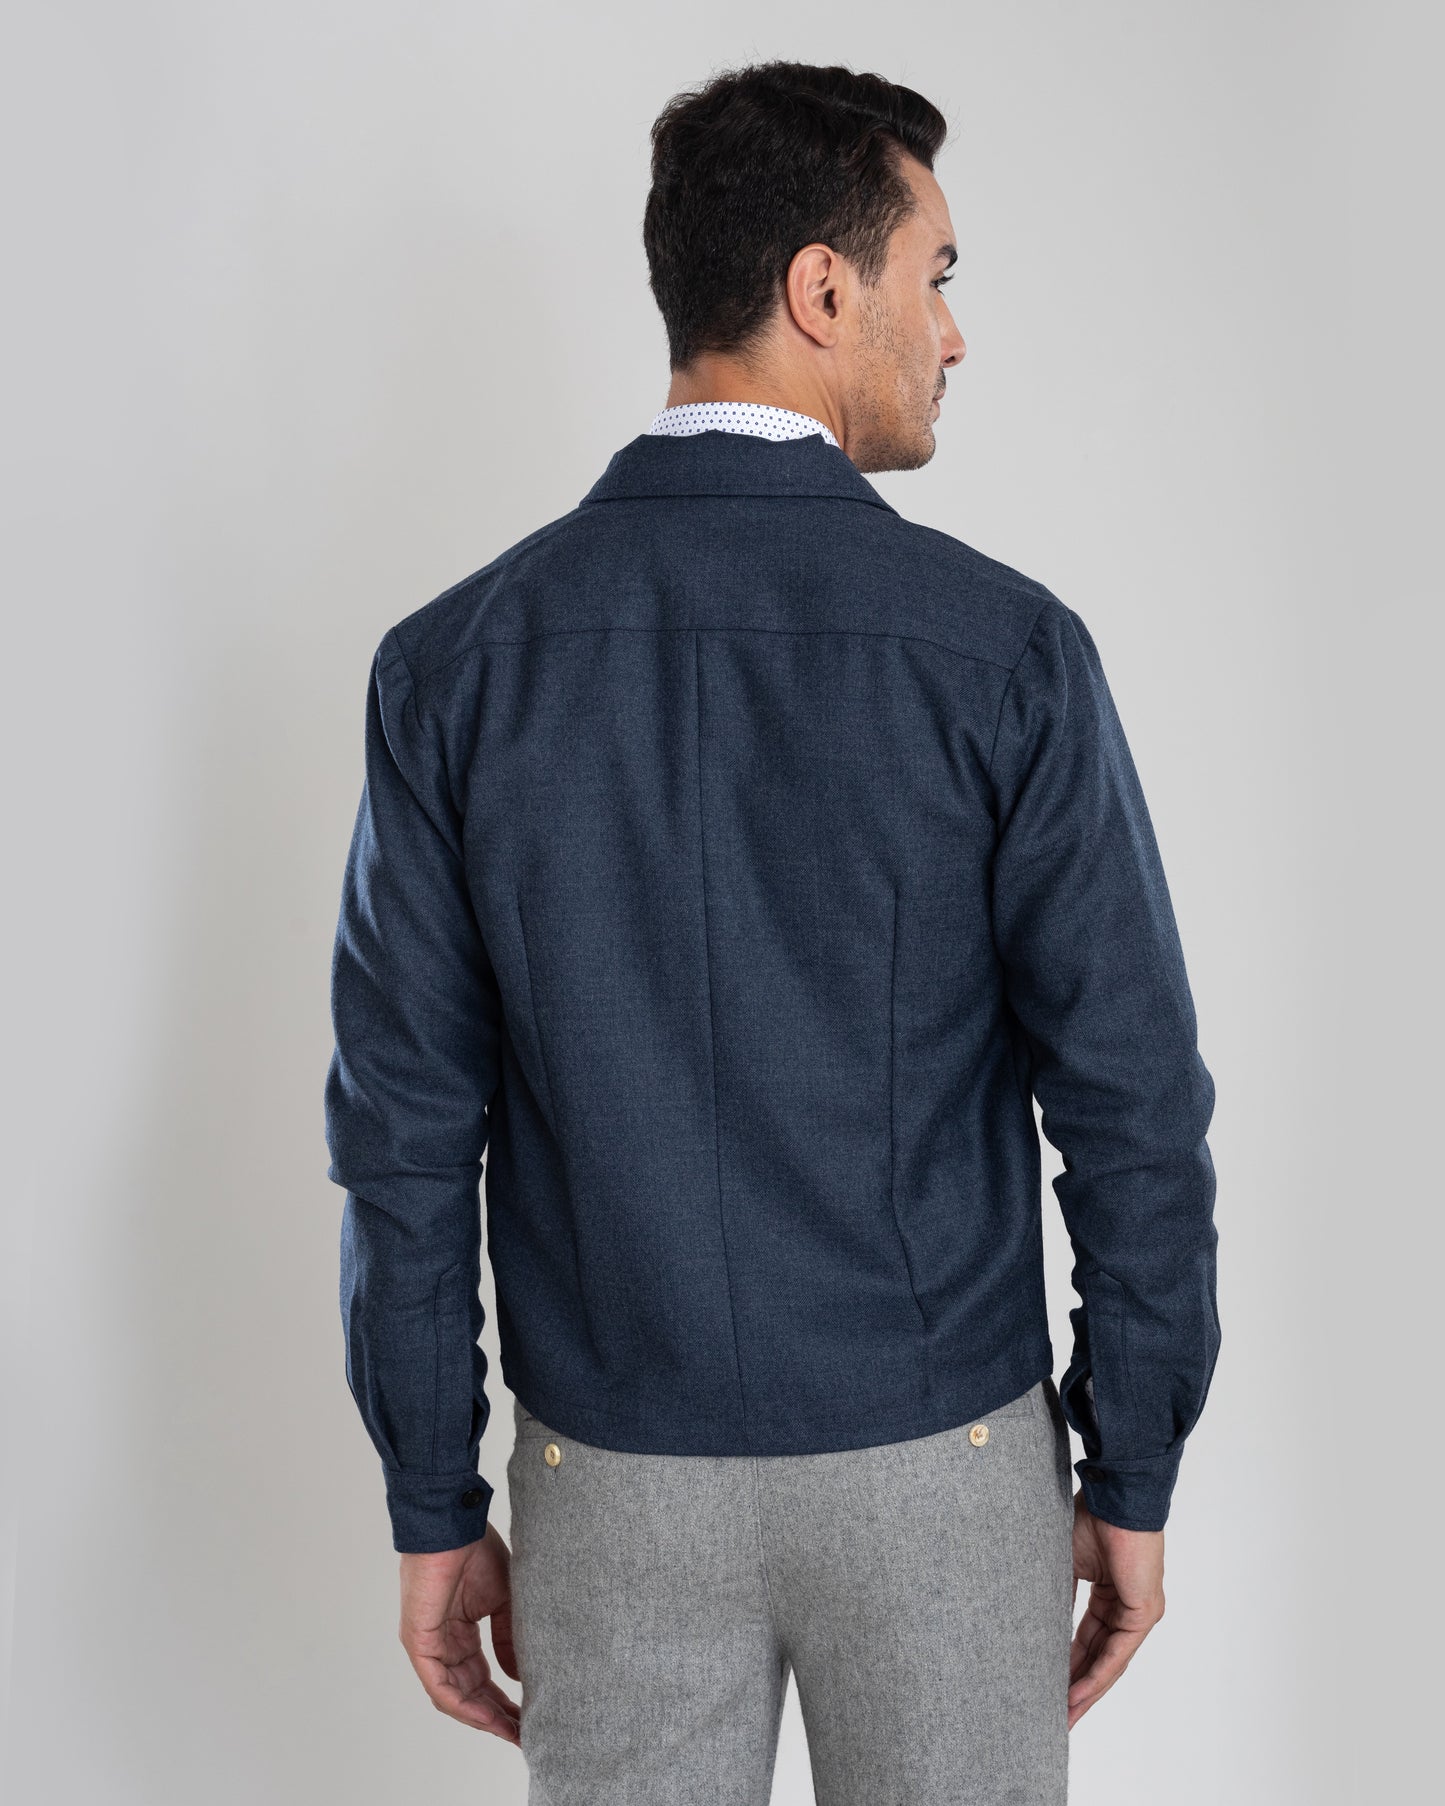 Dugdale Navy Blue Wool Flannel Shirt Jacket